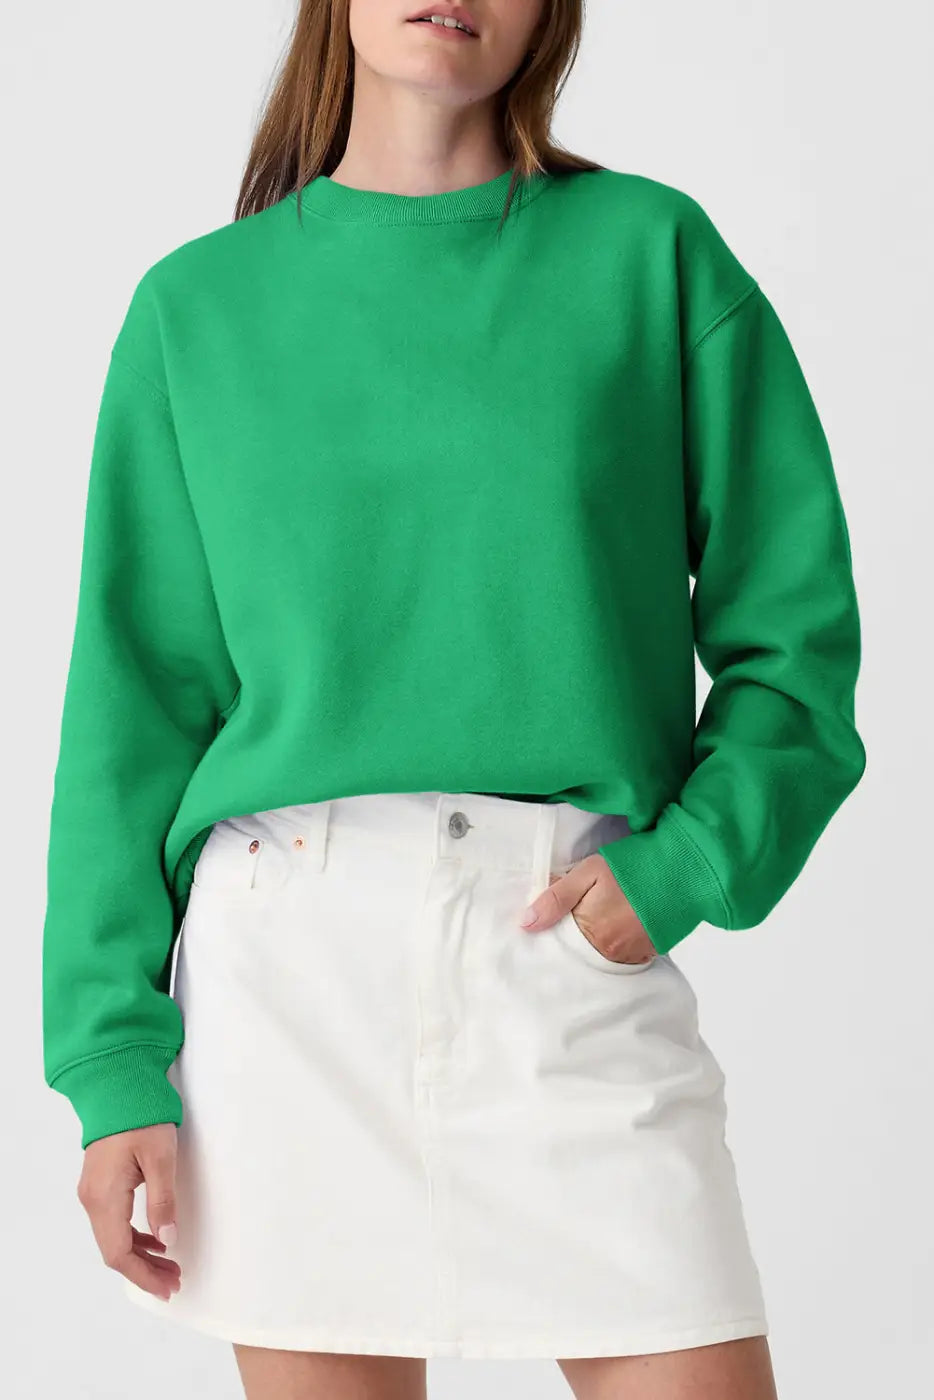 Relaxed fit terry sweatshirt - dark green / s / 50% polyester + 50% cotton - sweatshirts